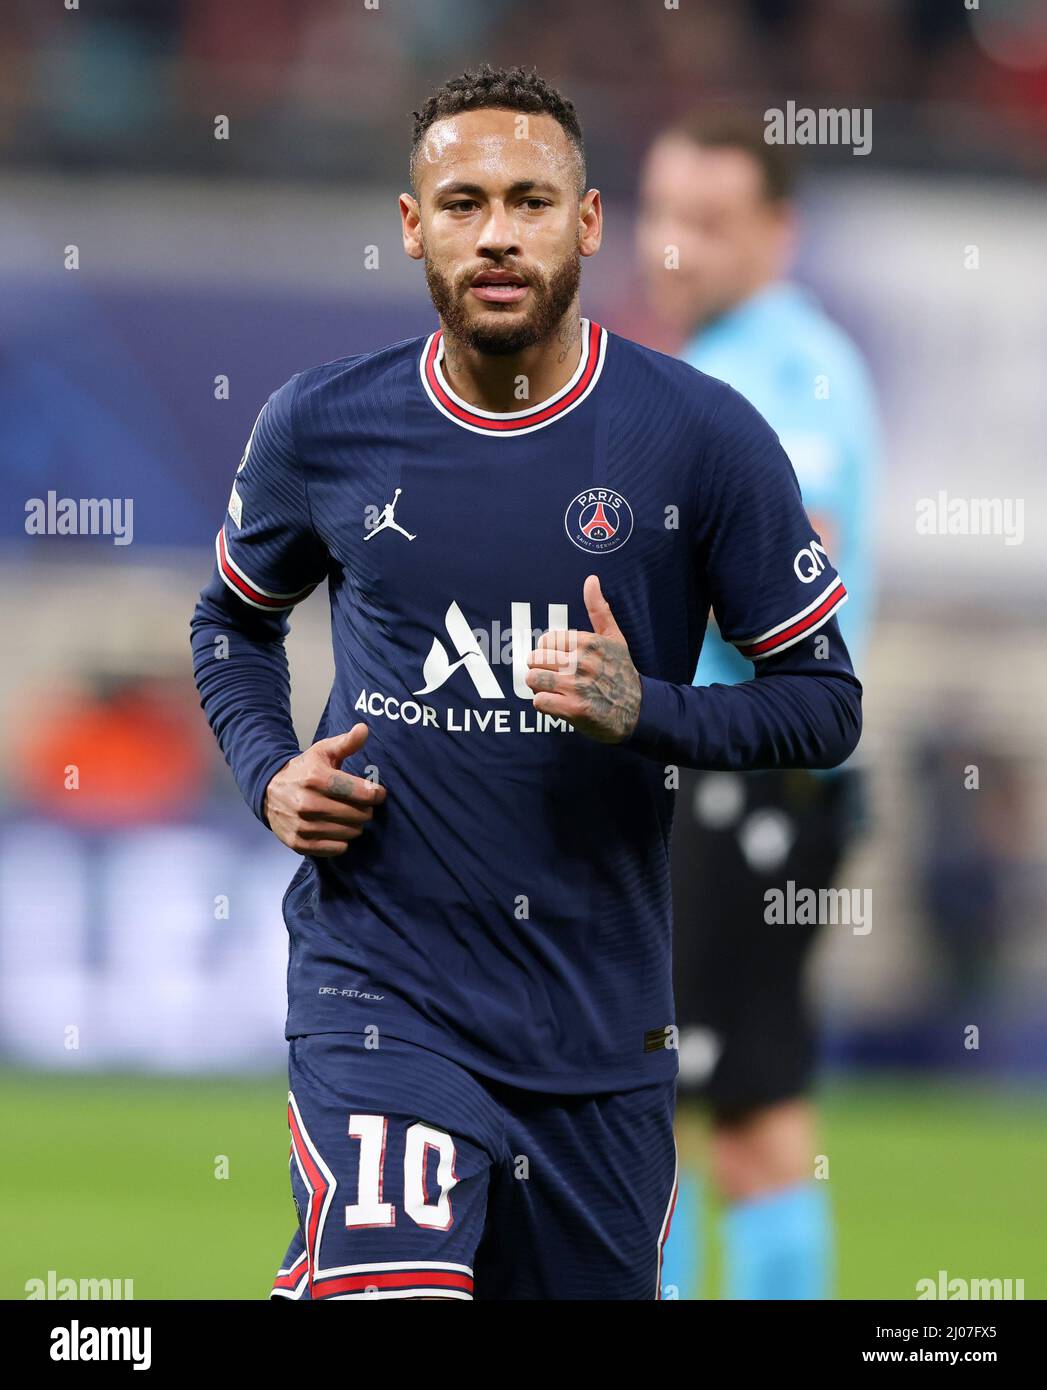 Neymar of Paris Saint Germain Fussball UEFA Championsleague RB Leipzig -  Paris St Germain Saison 2021 / 2022 3.11.2021 © diebilderwelt / Alamy Stock  Stock Photo - Alamy